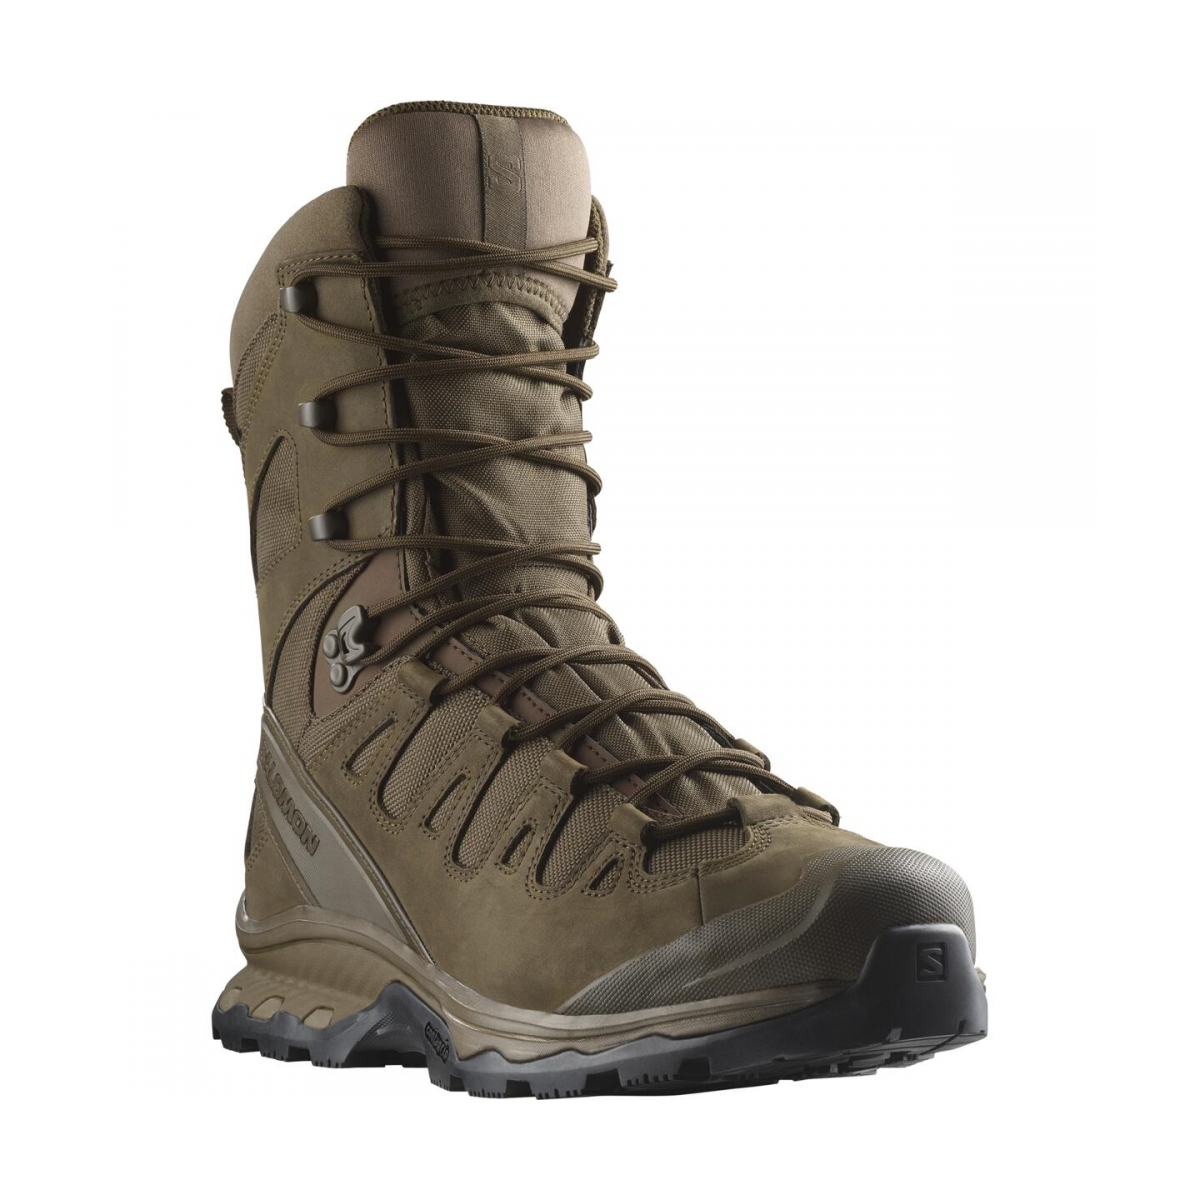 SALOMON QUEST 4D FORCES 2 HIGH GTX EN tactical footwear - earth brown